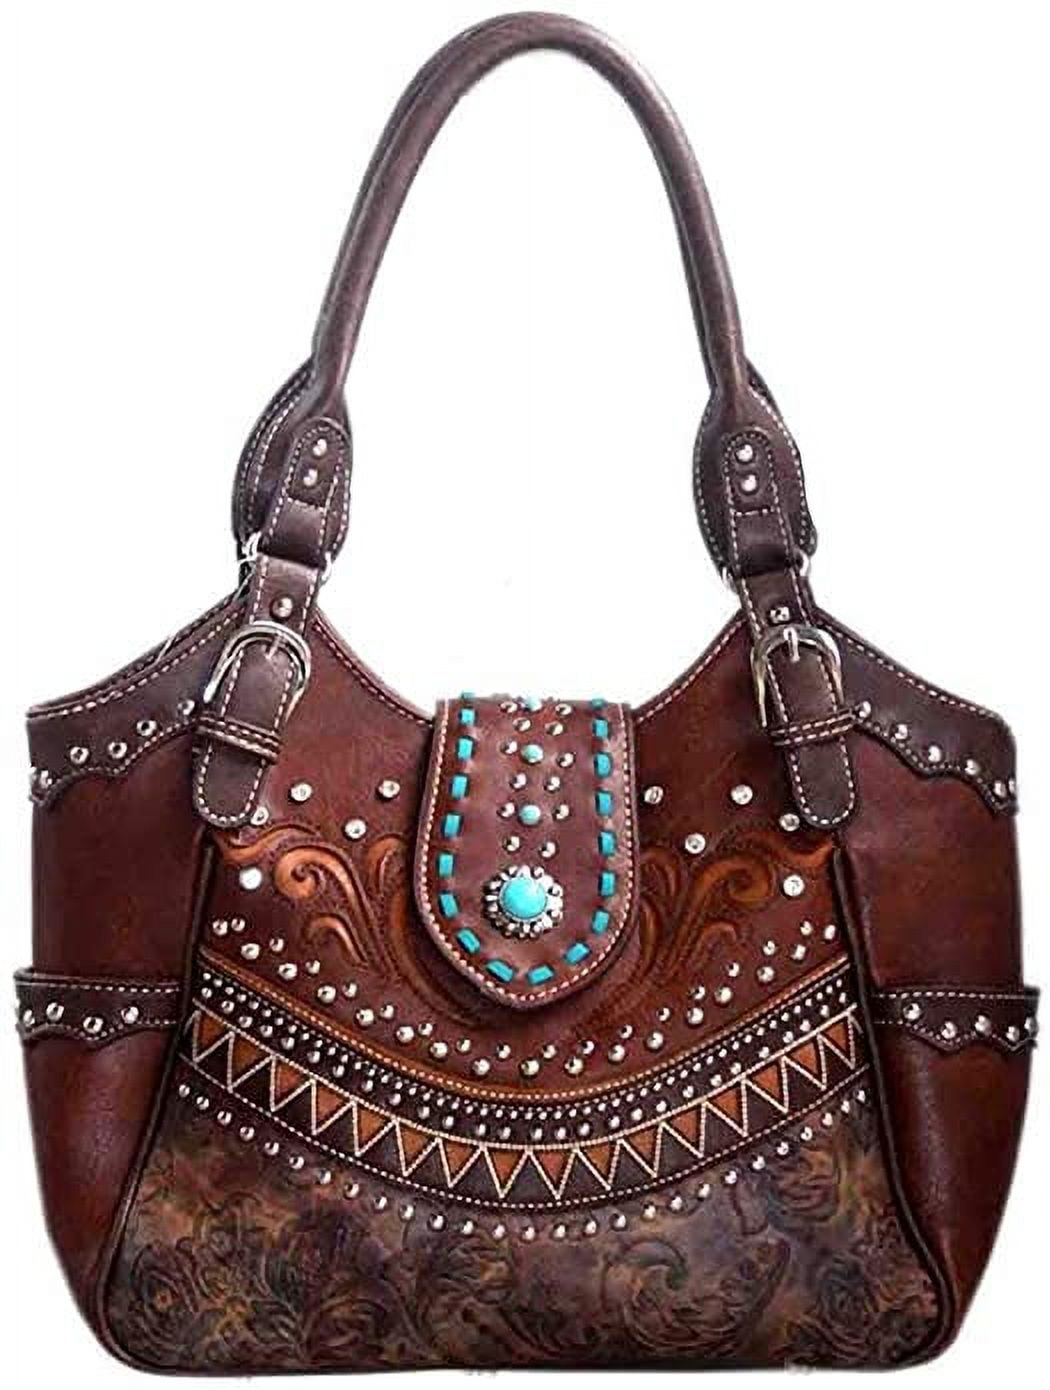 Buy VEZELA Handbags for Women Pack of 4 Shoulder Bag Crossbody Bag Handbag  PouchCard at Amazon.in